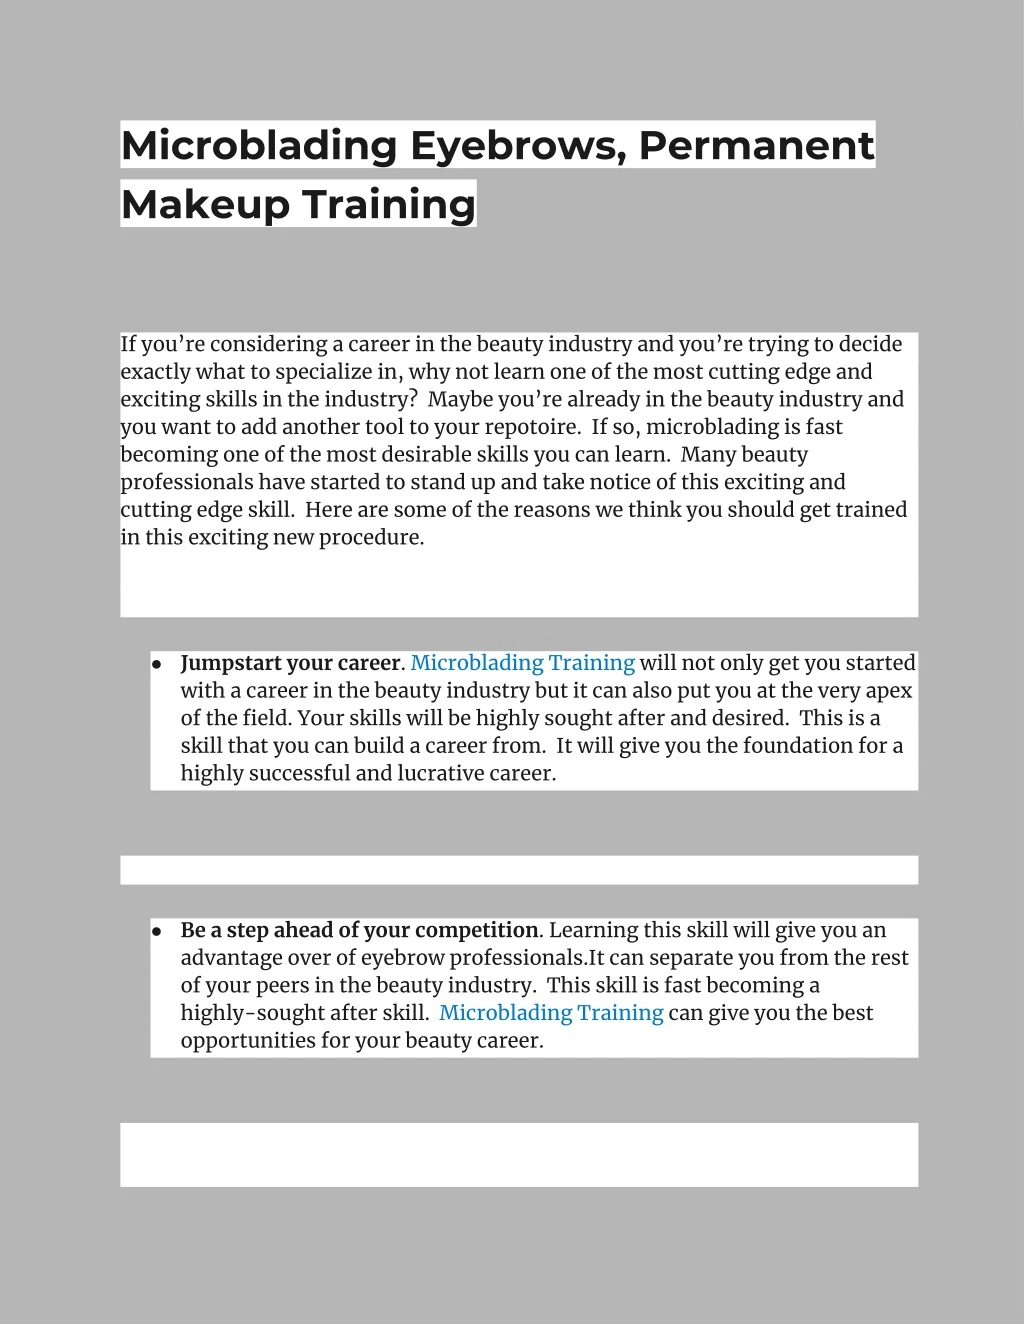 microblading eyebrows permanent makeup training